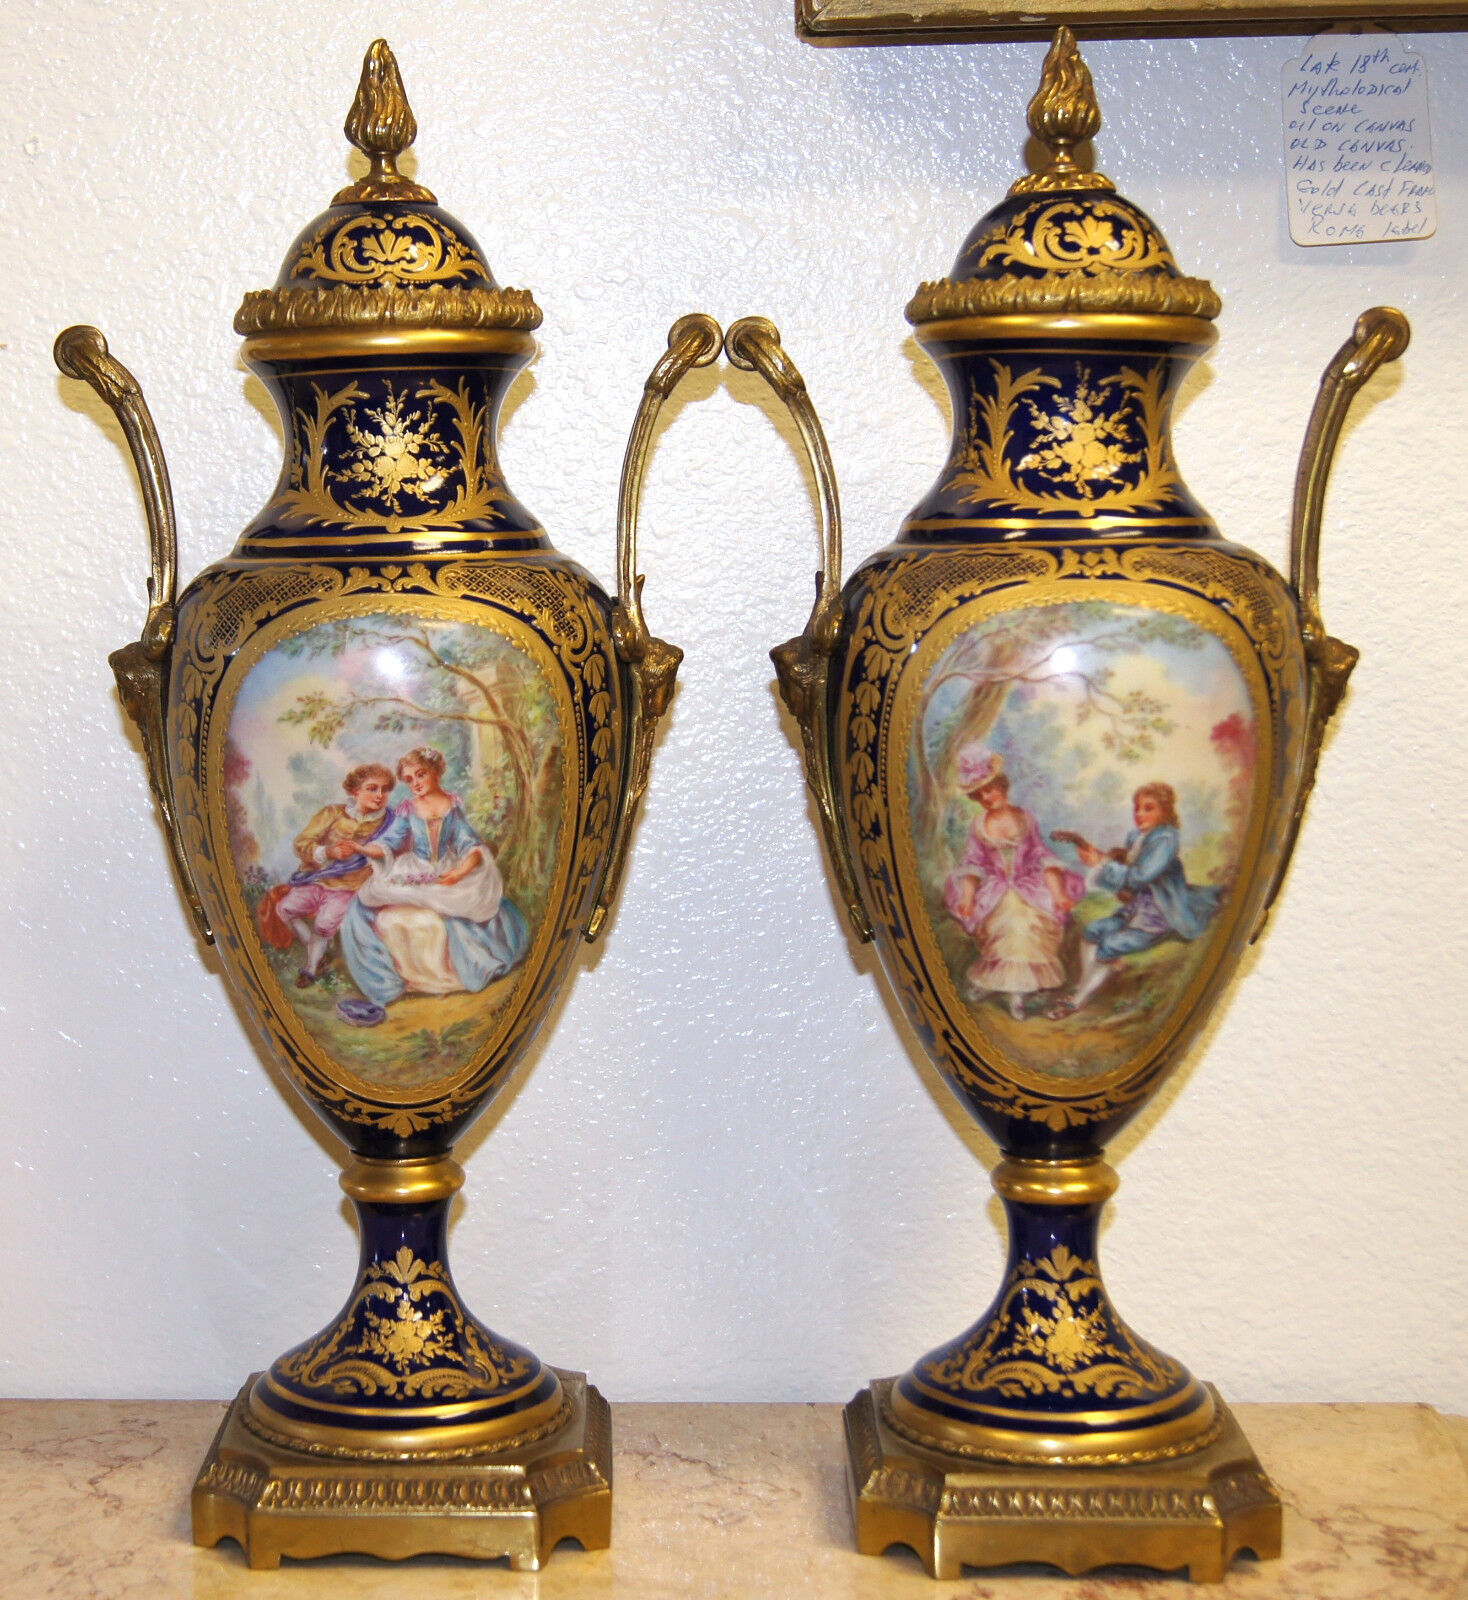  Antique French Ormolu-Mounts Sèvres Style Pair of Porcelain Vases Circa 1860s